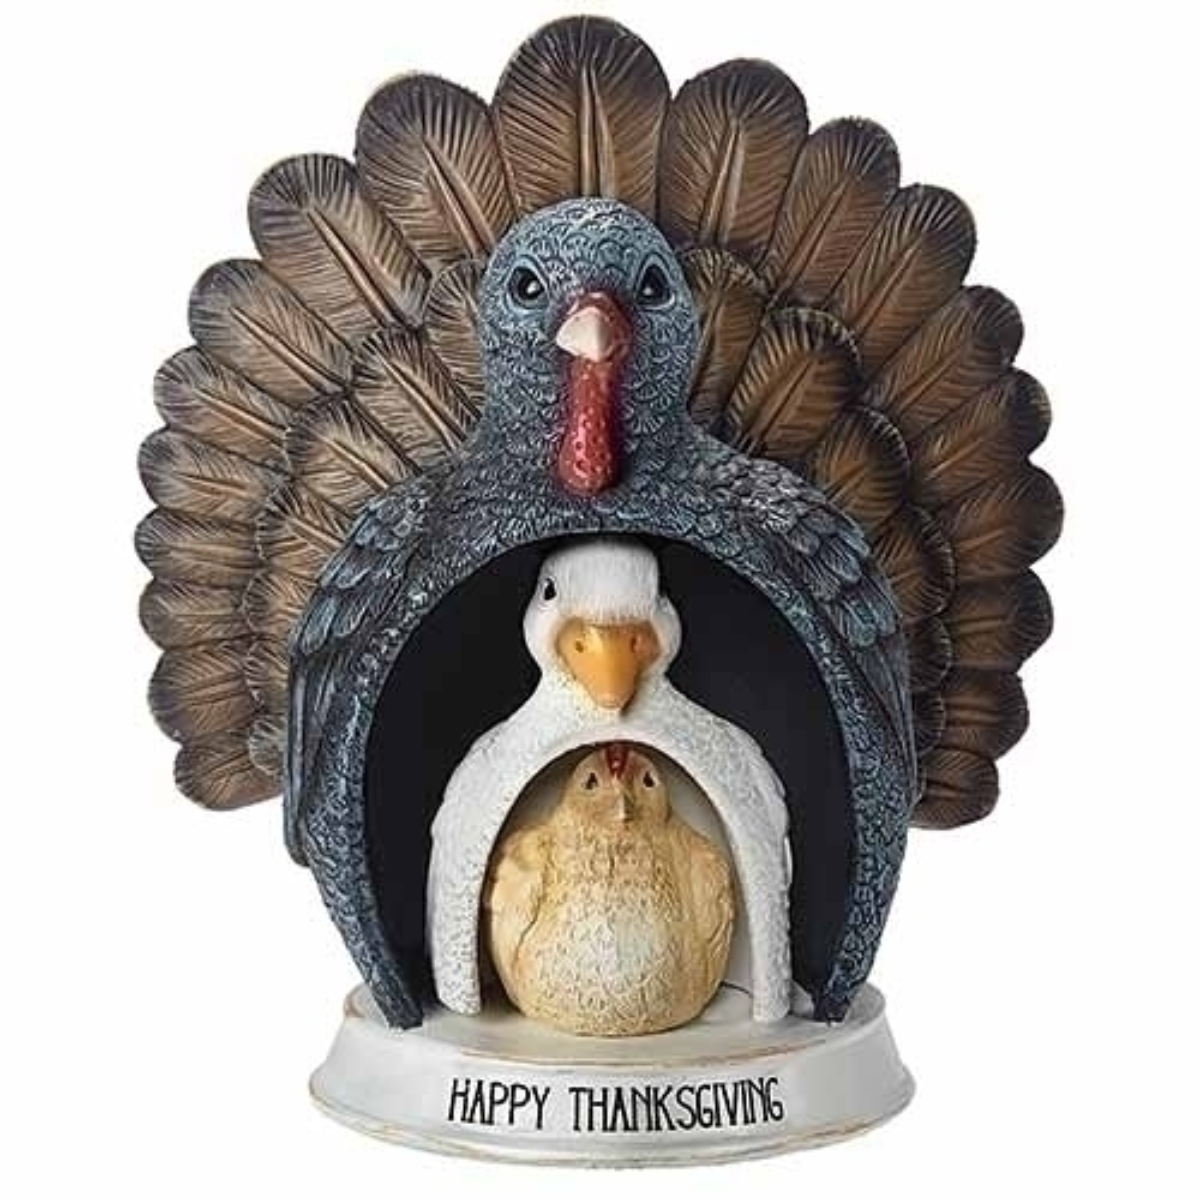 Roman Set of 3 Nesting Turducken "Happy Thanksgiving" Holiday Figures 9.5"